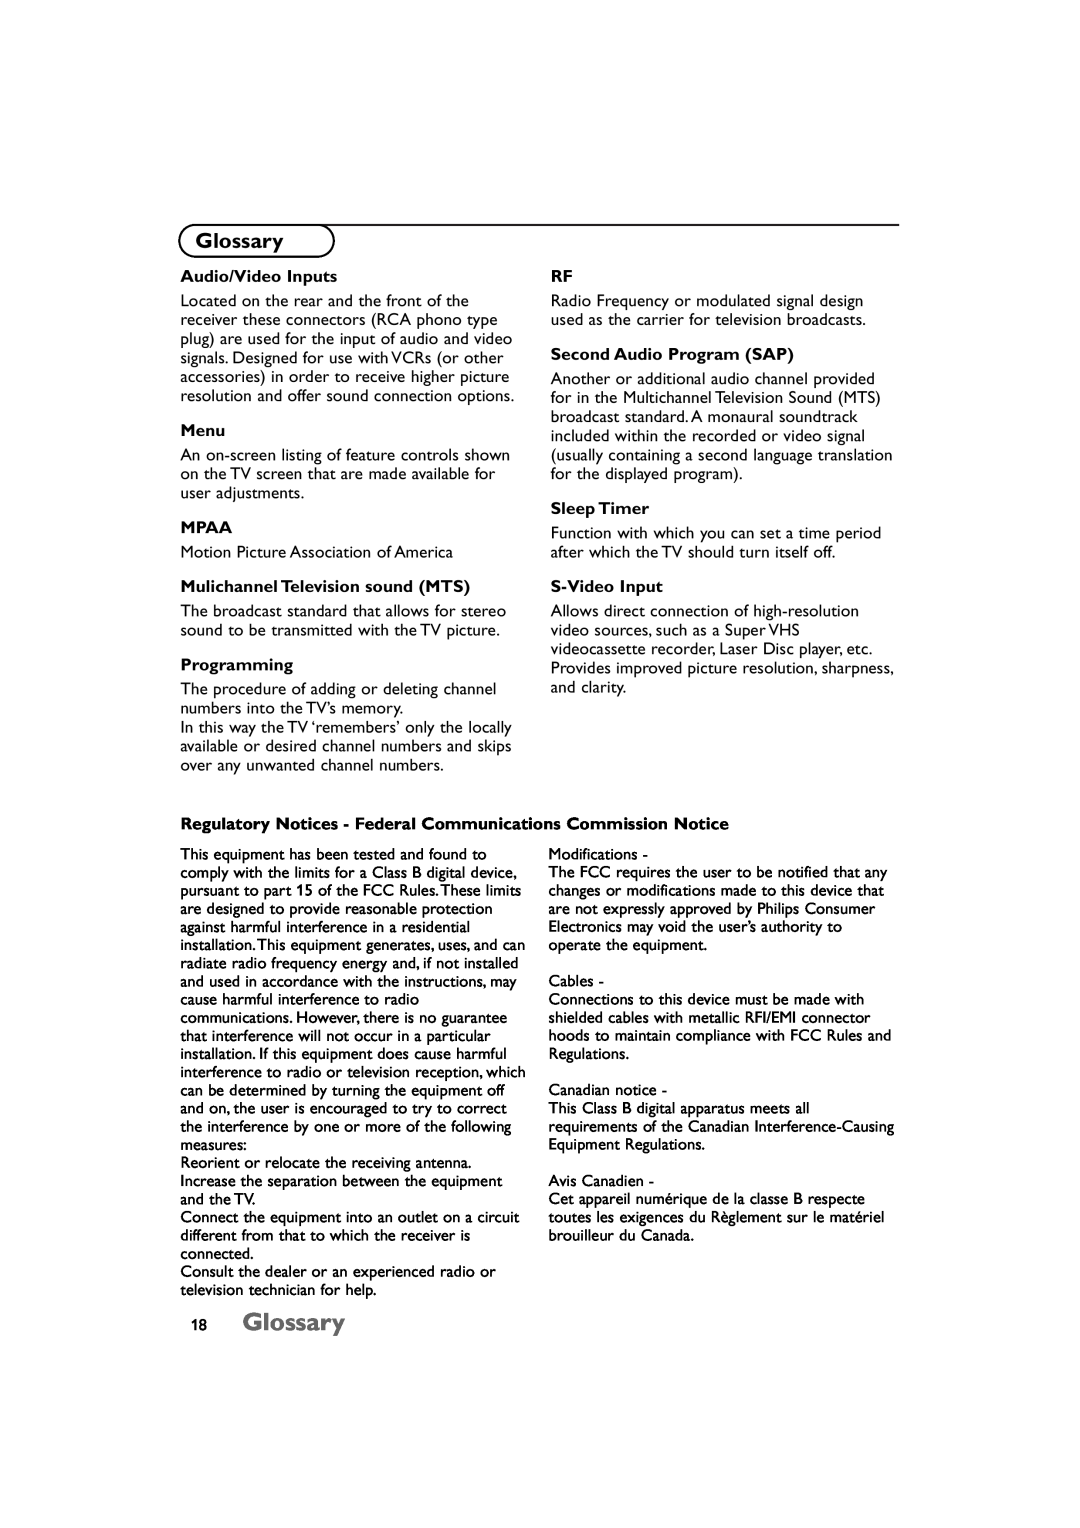 Technicolor - Thomson 15 manual Glossary, Audio/Video Inputs, Menu, Mpaa, Mulichannel Television sound MTS, Programming 